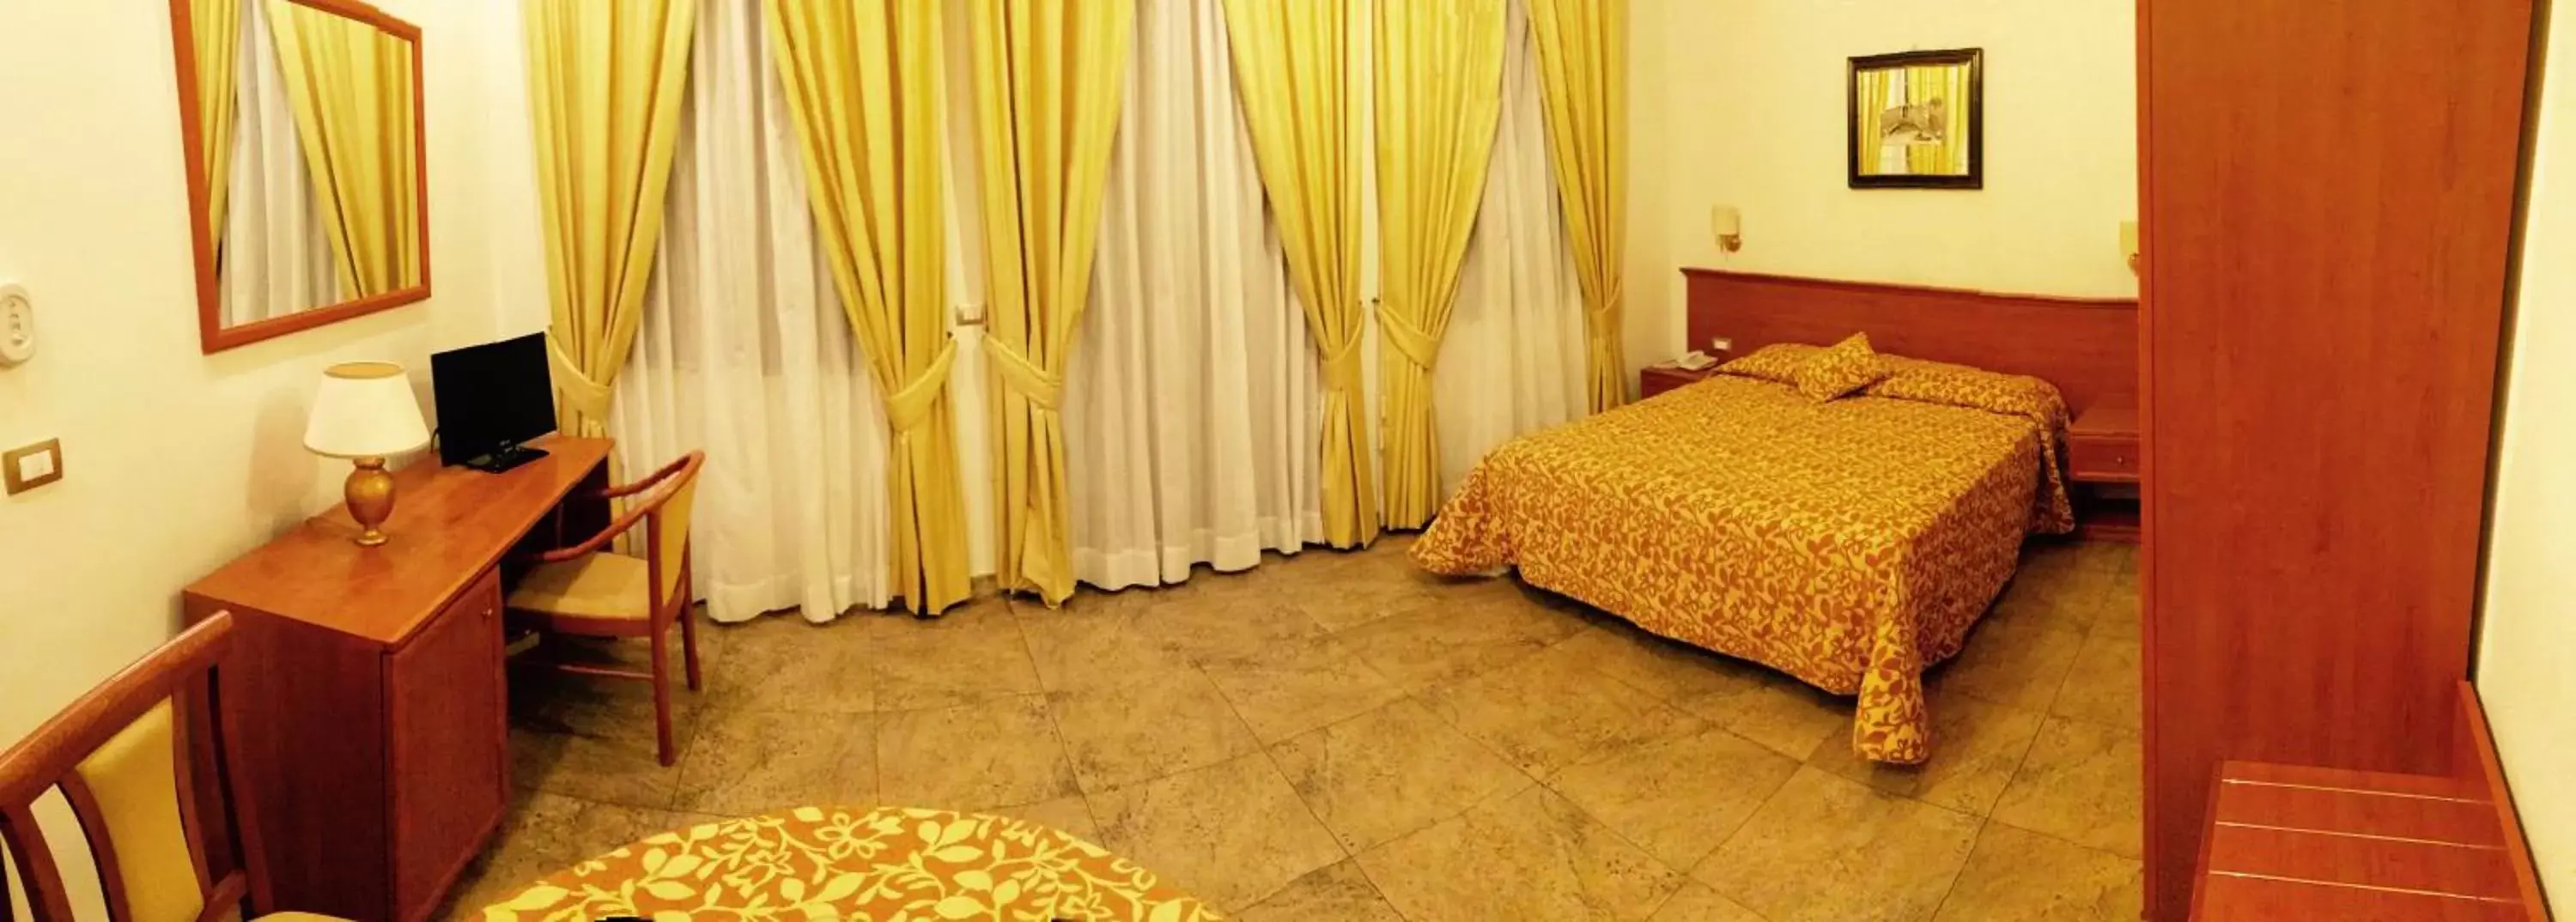 Bedroom in Grand Hotel Stella Maris Italia